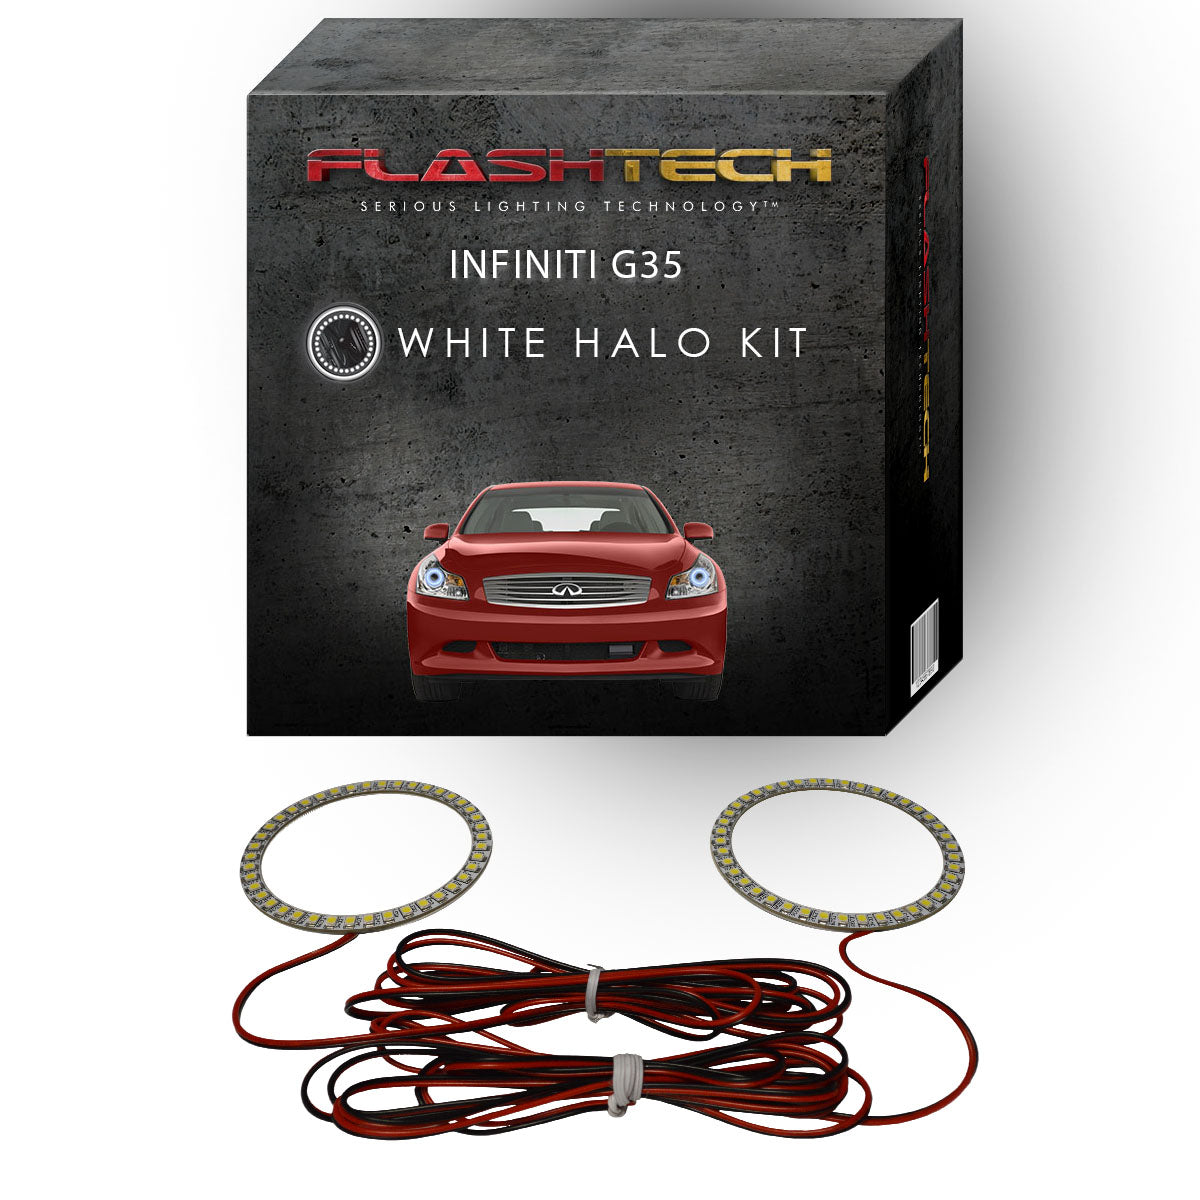 Infiniti-G35-2007, 2008, 2009-LED-Halo-Headlights-White-RF Remote White-IN-G35S0709-WHRF